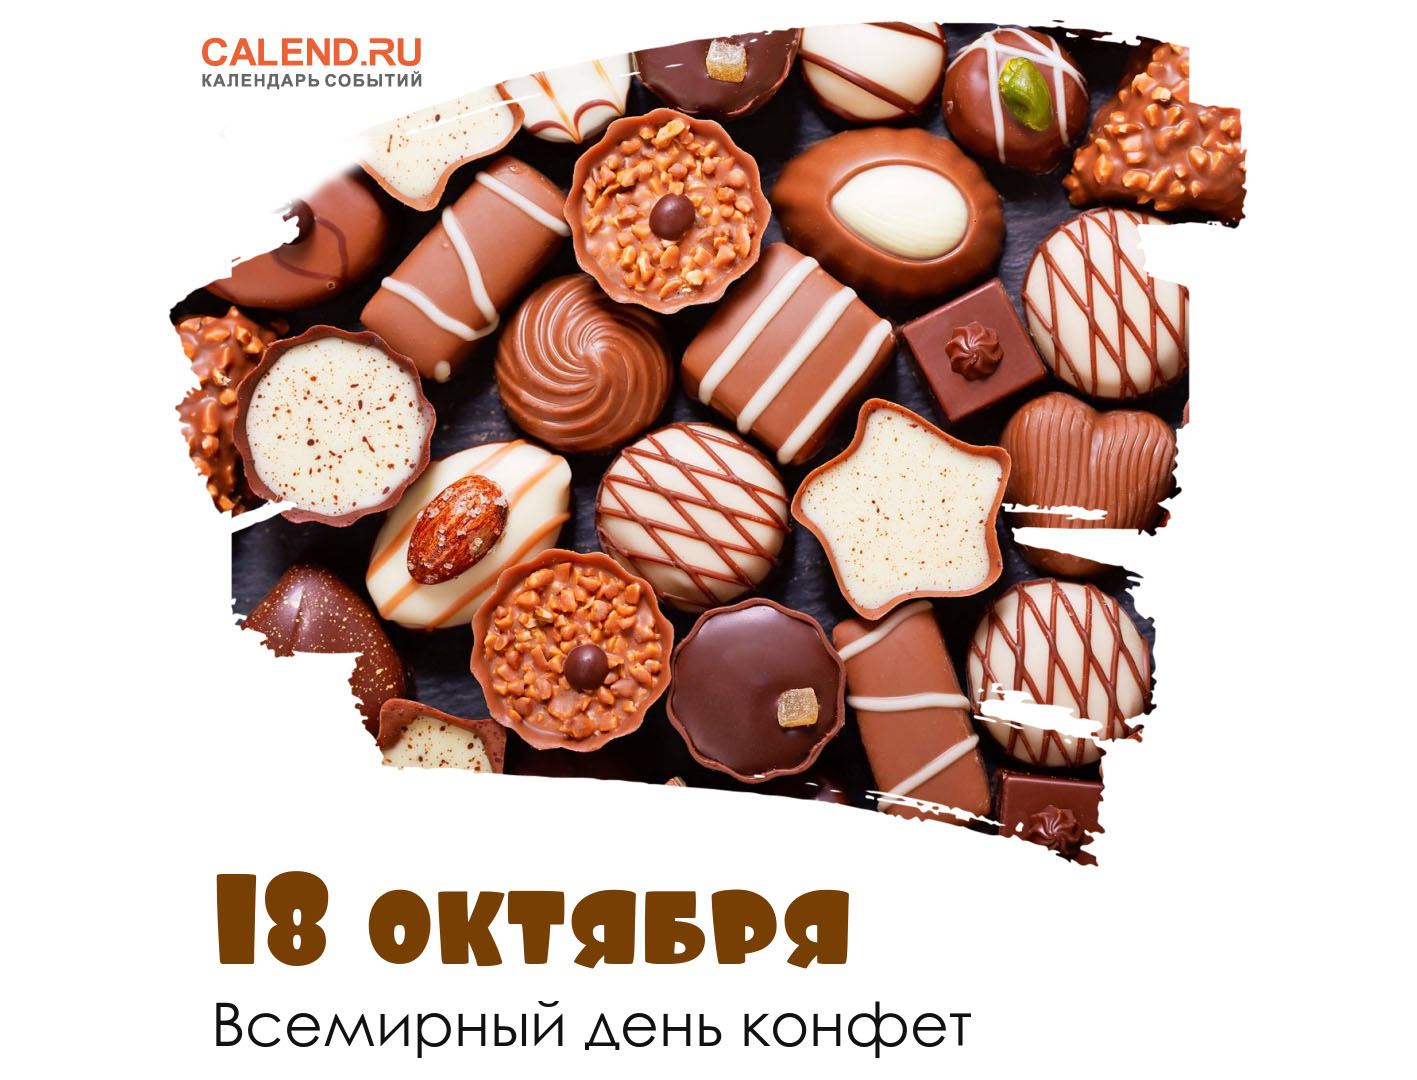 https://www.calend.ru/calendar/wp-content/uploads/18-oktyabrya-2.jpg